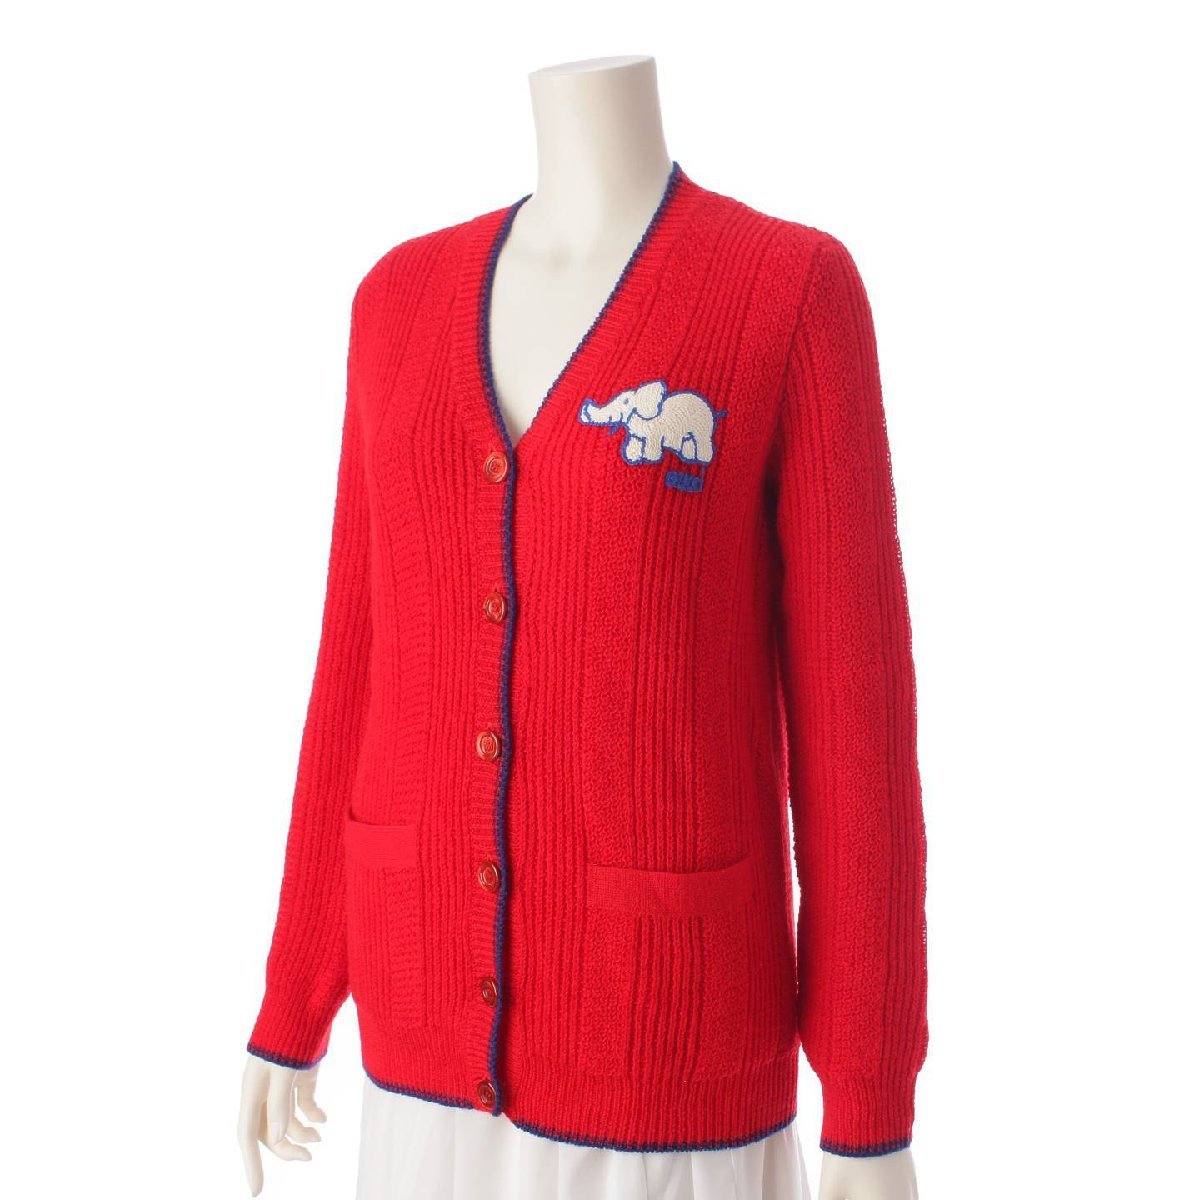 [ Gucci ]Gucci Logo Elephant вязаный кардиган свитер tops 543448 красный XS [ б/у ][ стандартный товар гарантия ]196141